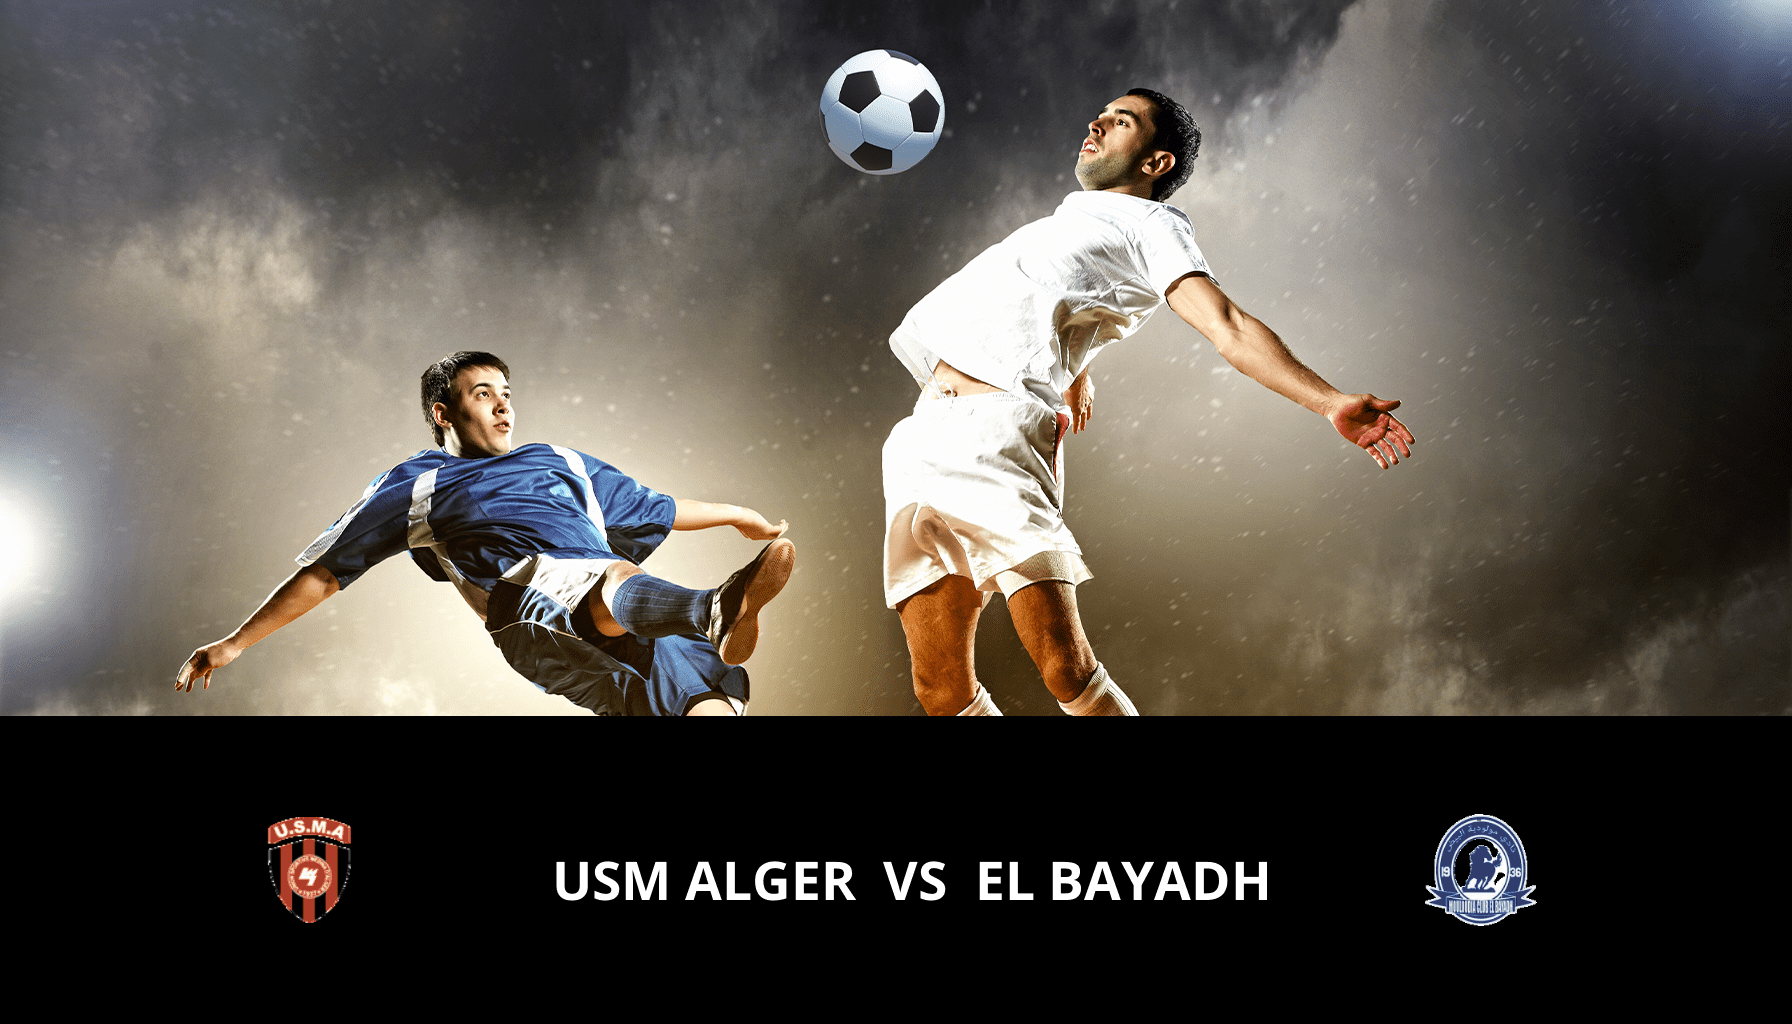 Previsione per USM Alger VS El Bayadh il 10/05/2024 Analysis of the match